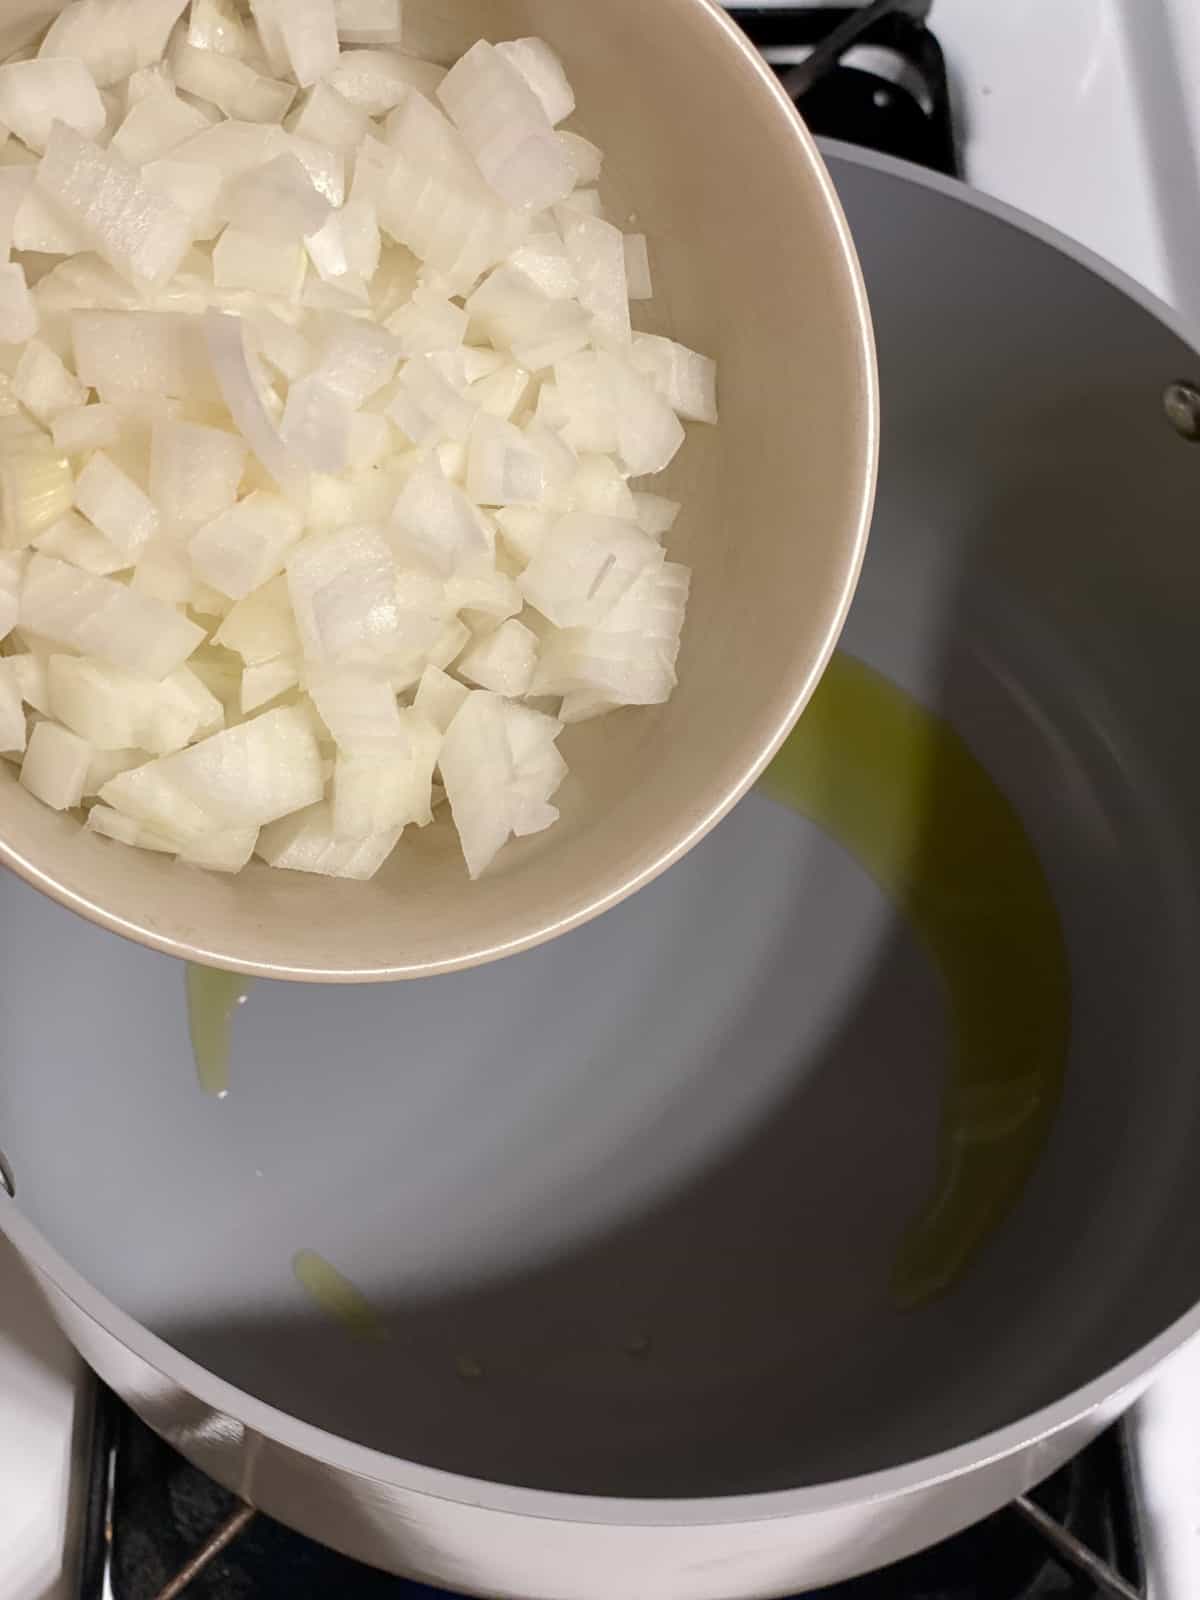 process shot of adding onions to pan